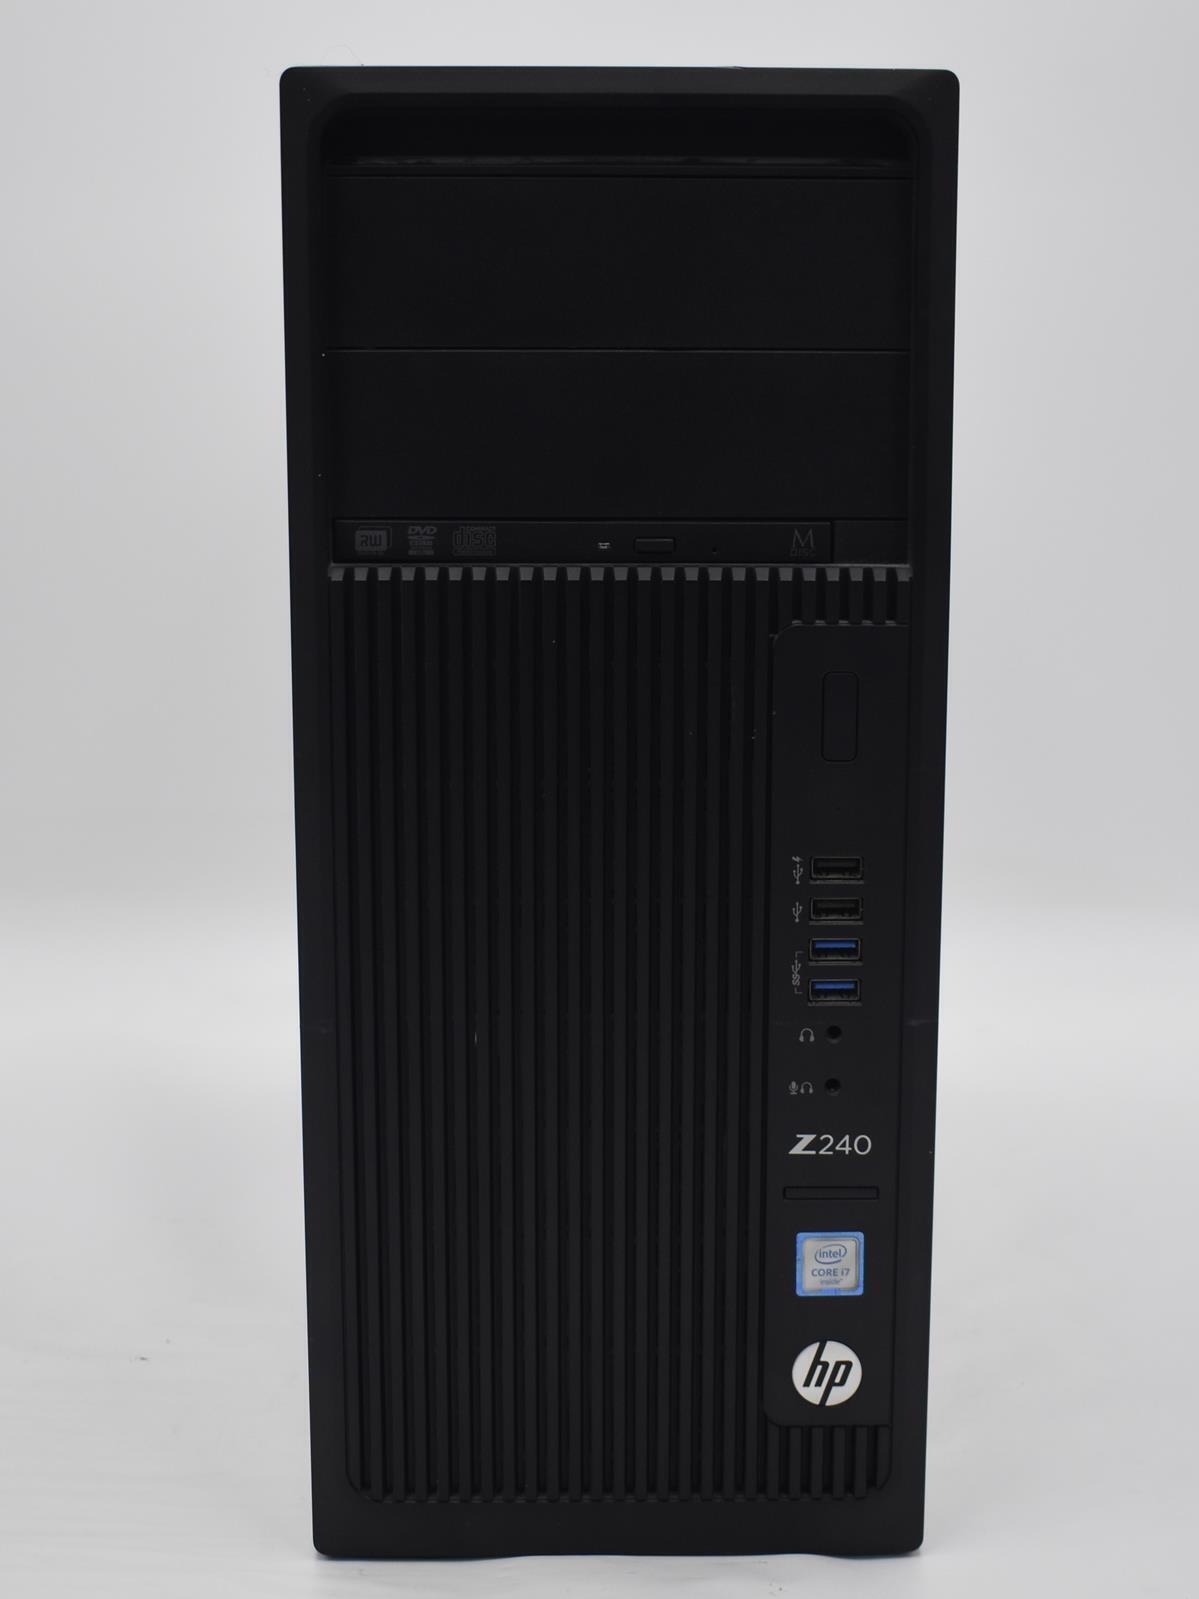 HP Z240 WORKSTATION INTEL CORE I7-6700 3.40 GHz 32GB NO HDD/OS QUADRO M2000